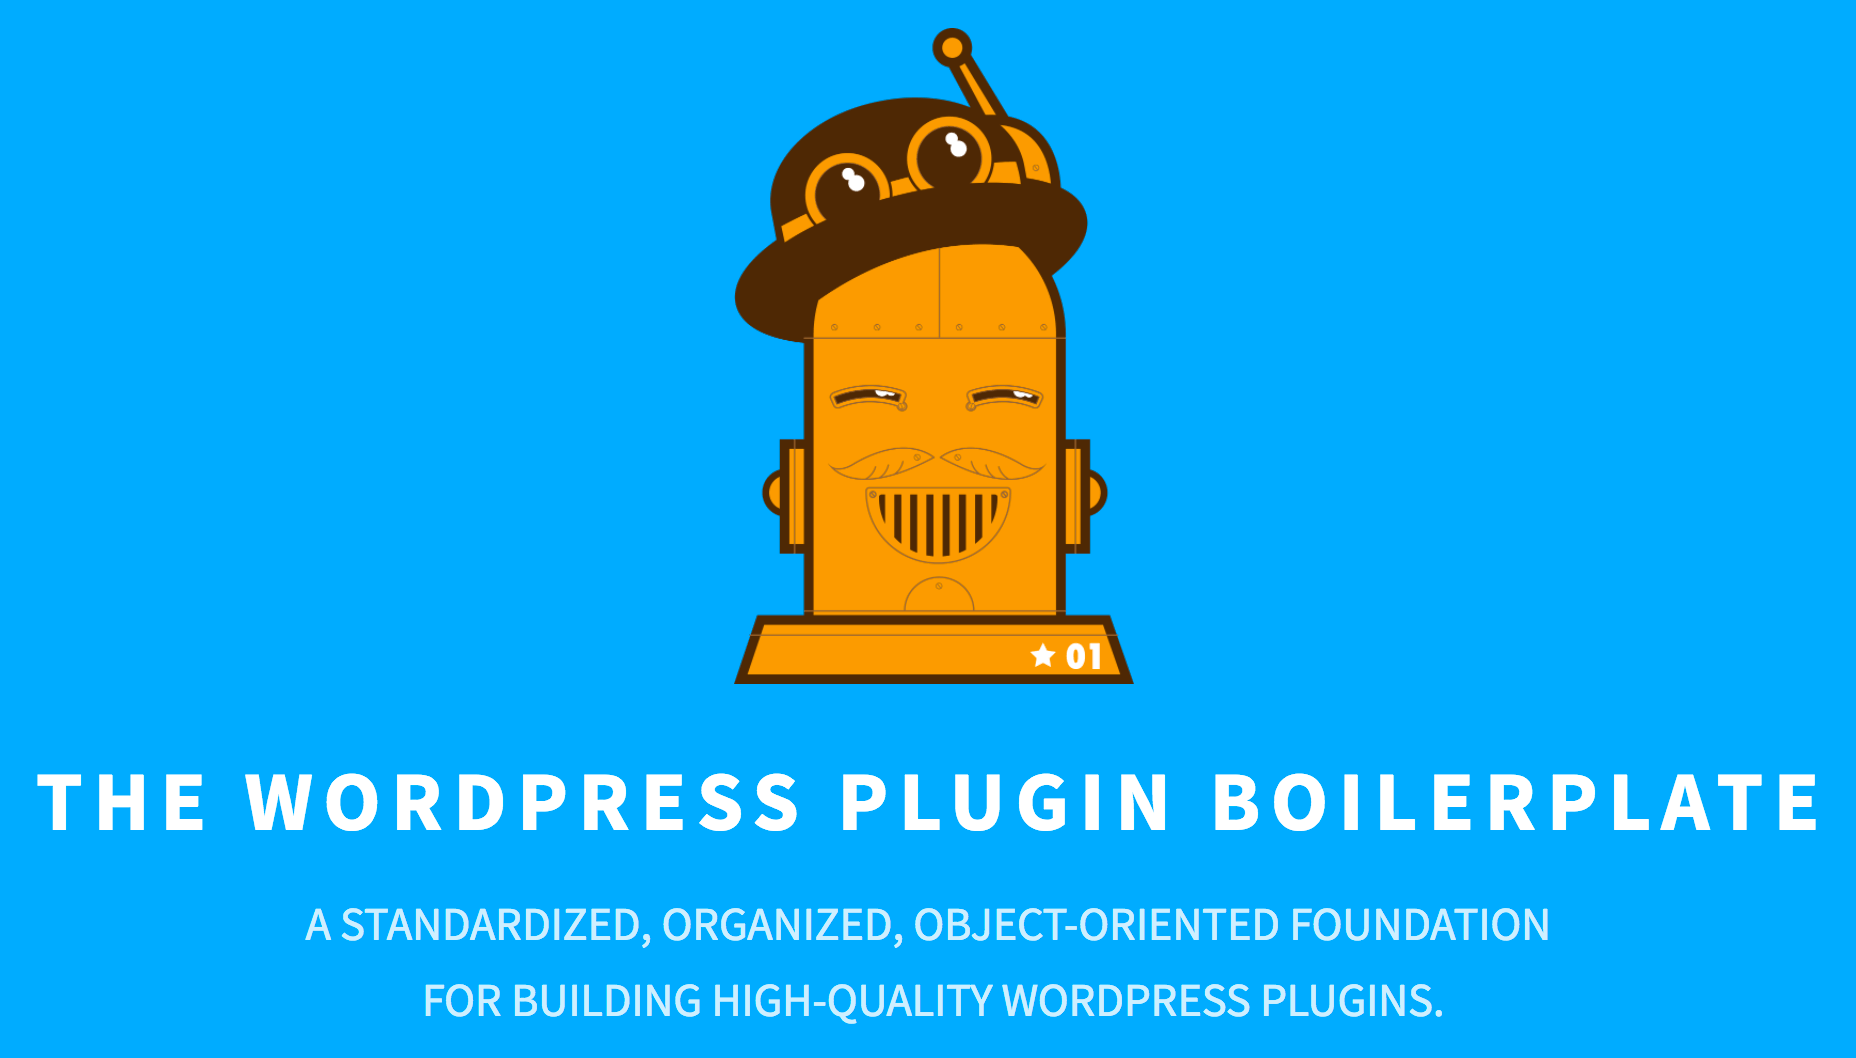 WordPress Plugin Boilerplate